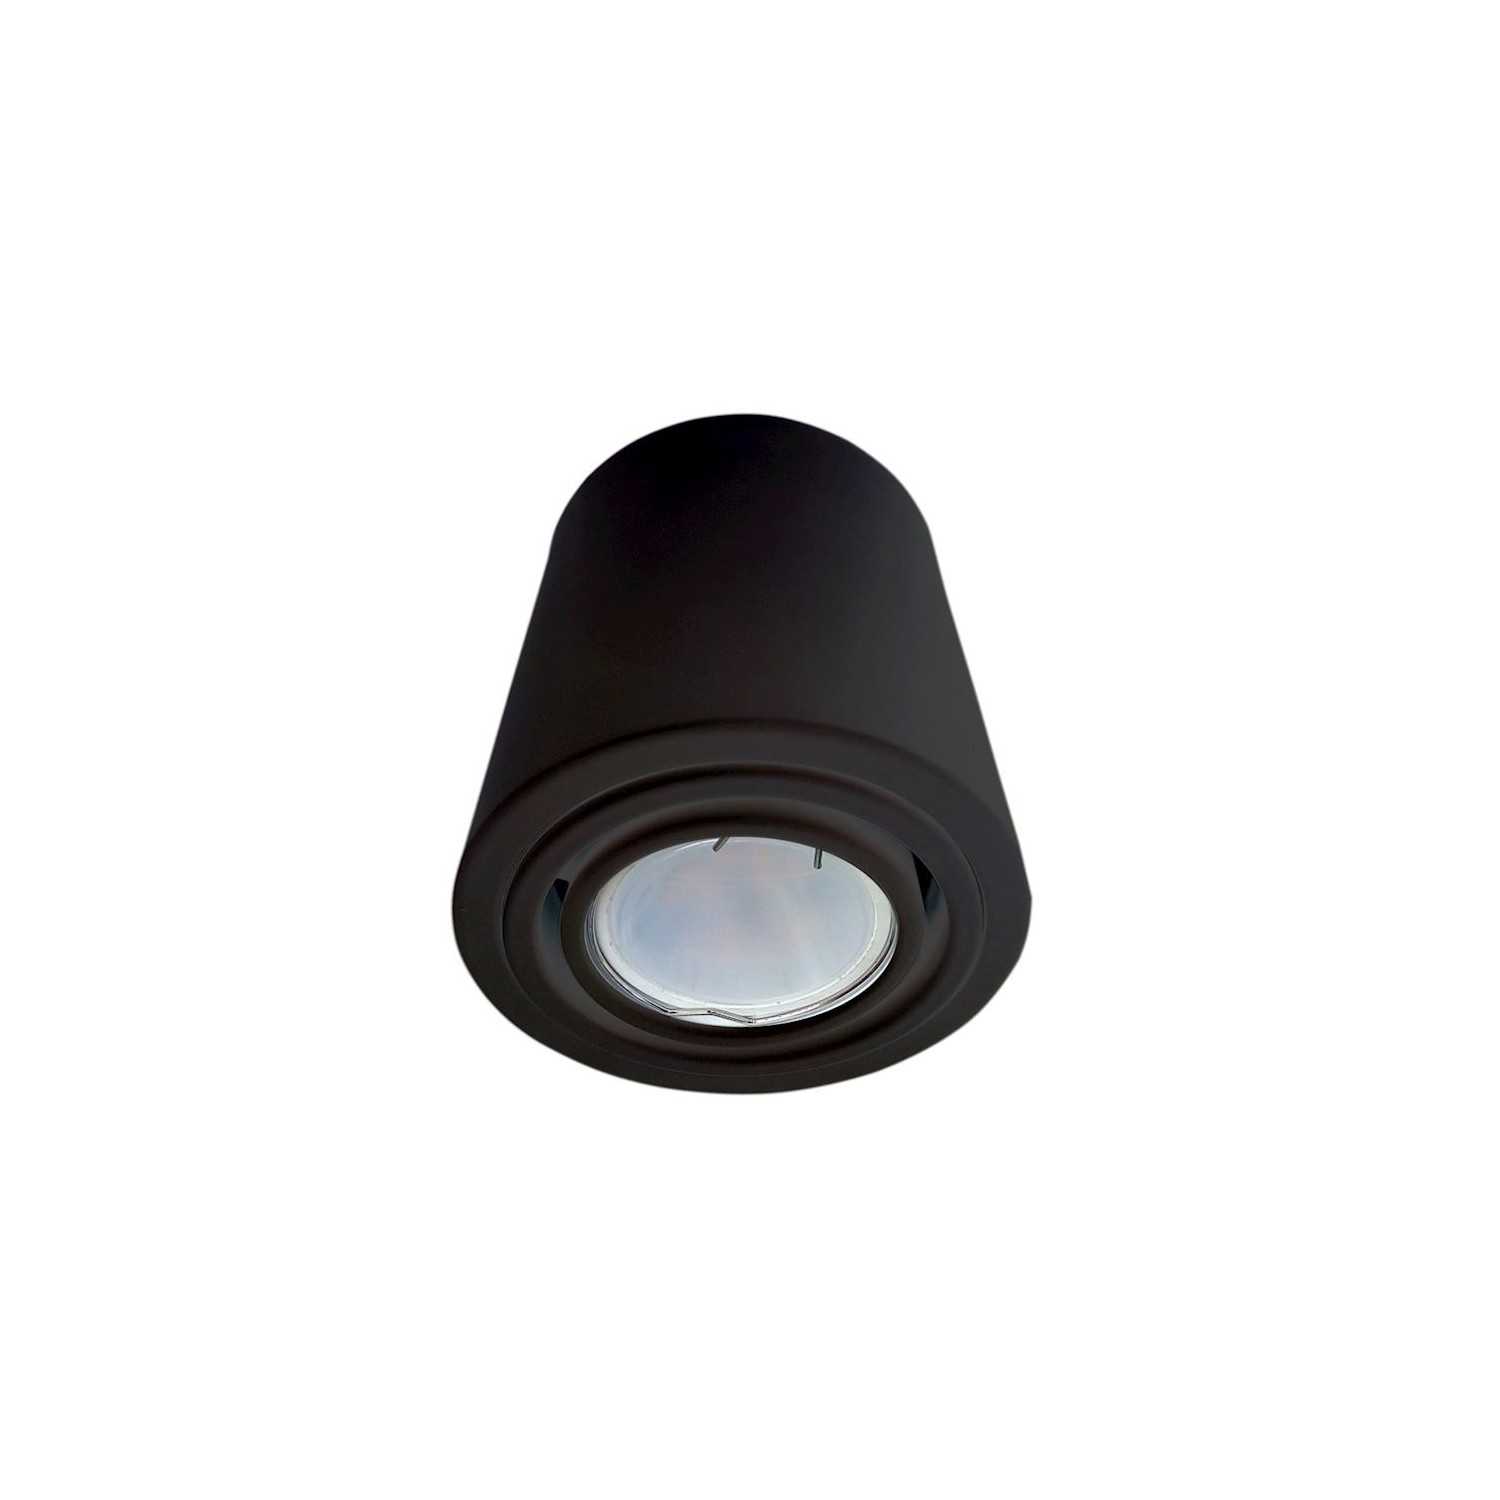 LAMPA SUFITOWA TUBO WHITE 1X7W LED GU10